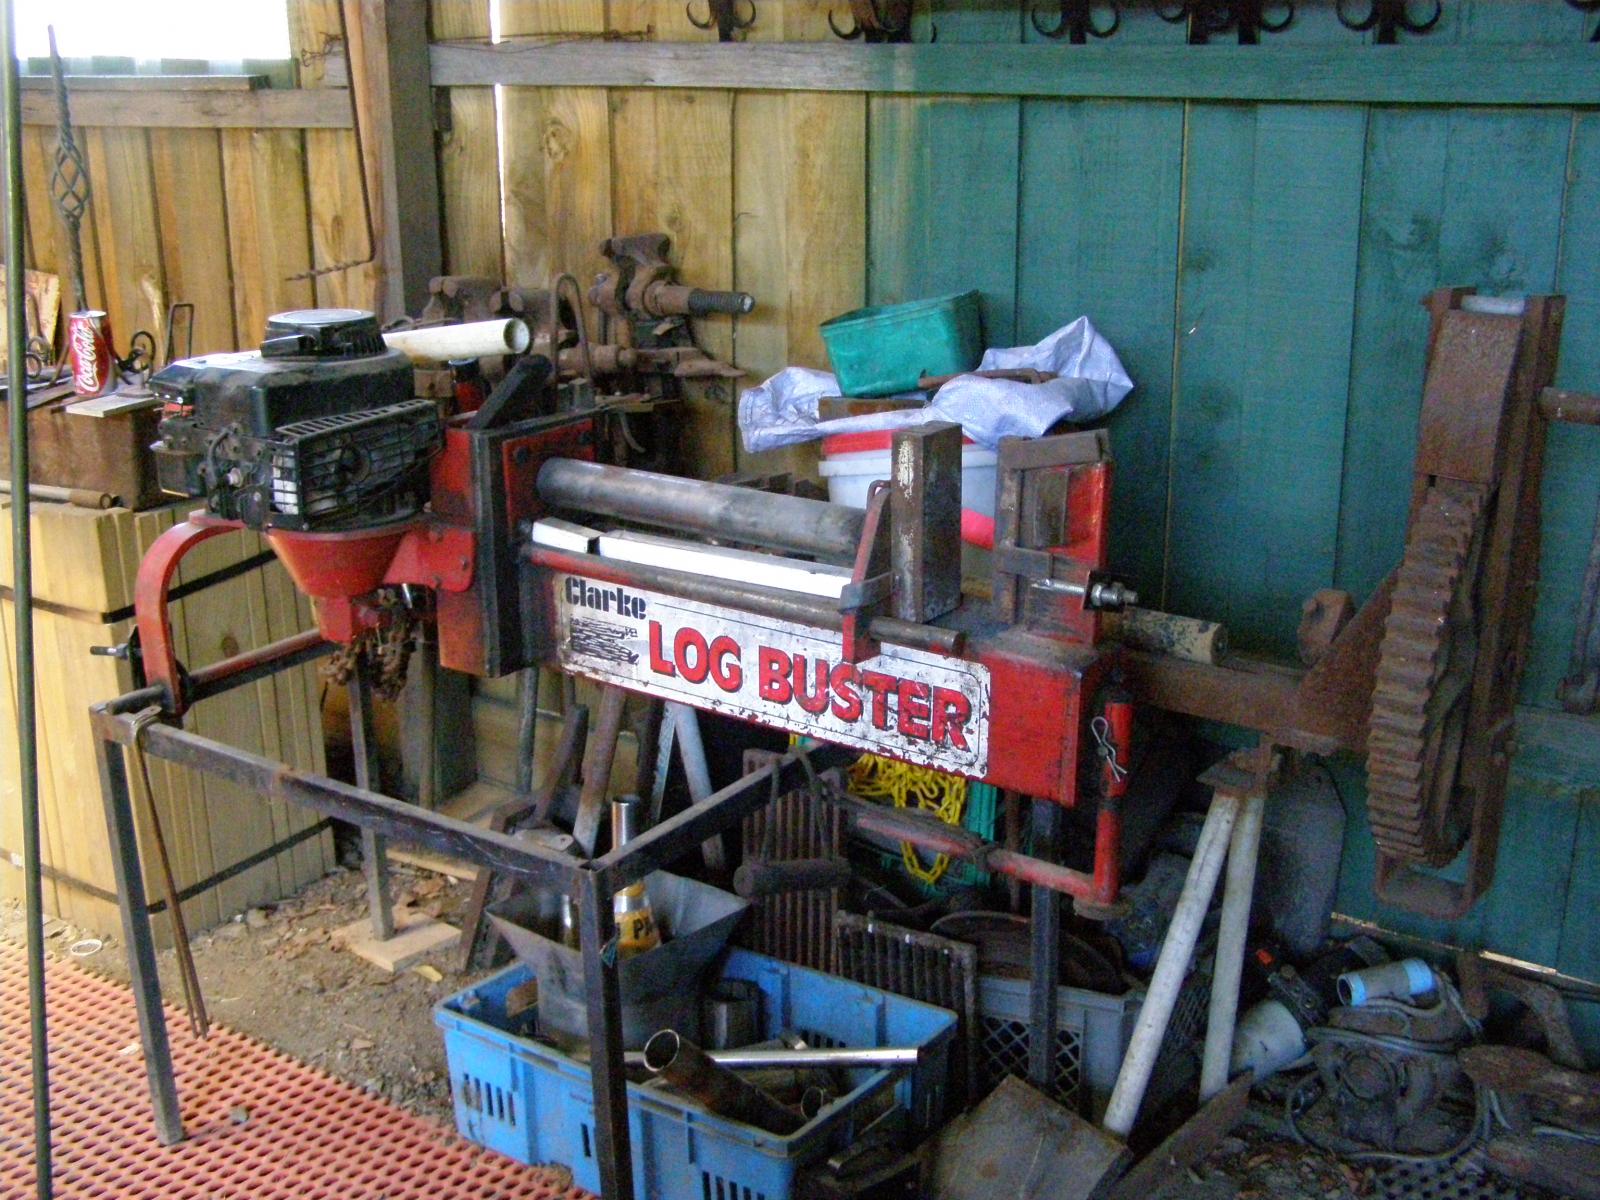 Log Splitter or Forge Press?